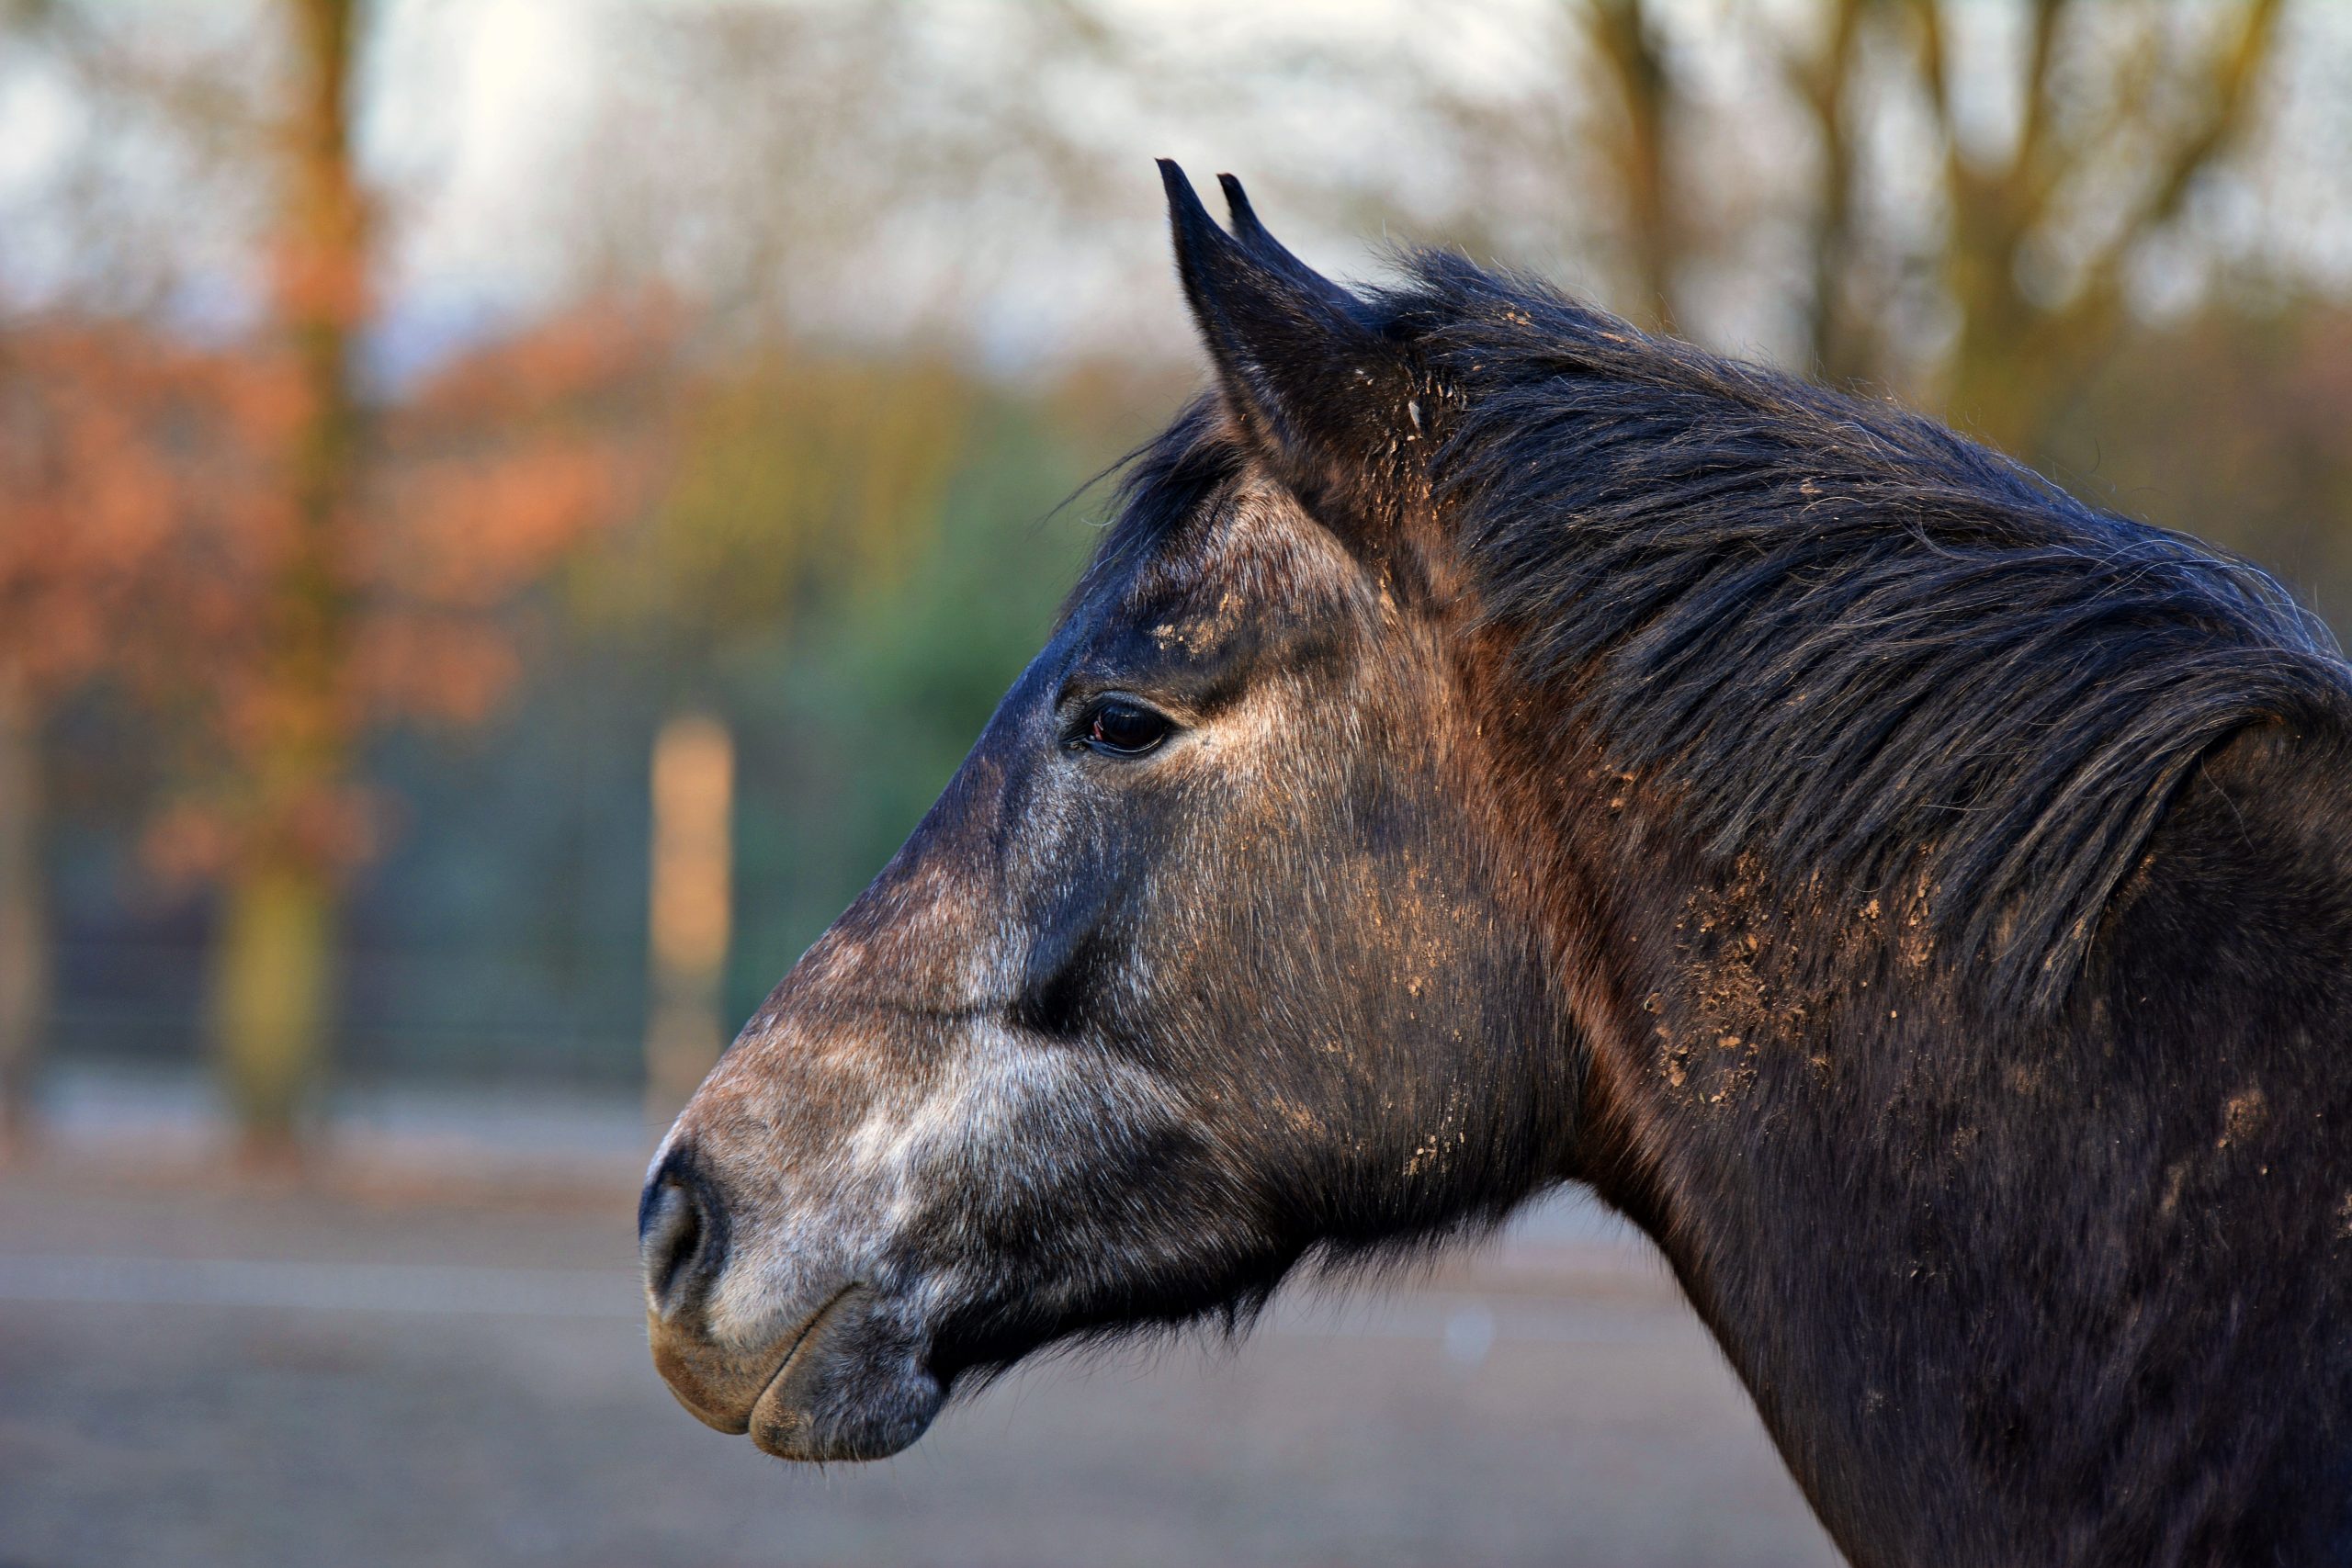 Vet’s plea over sale of elderly horses